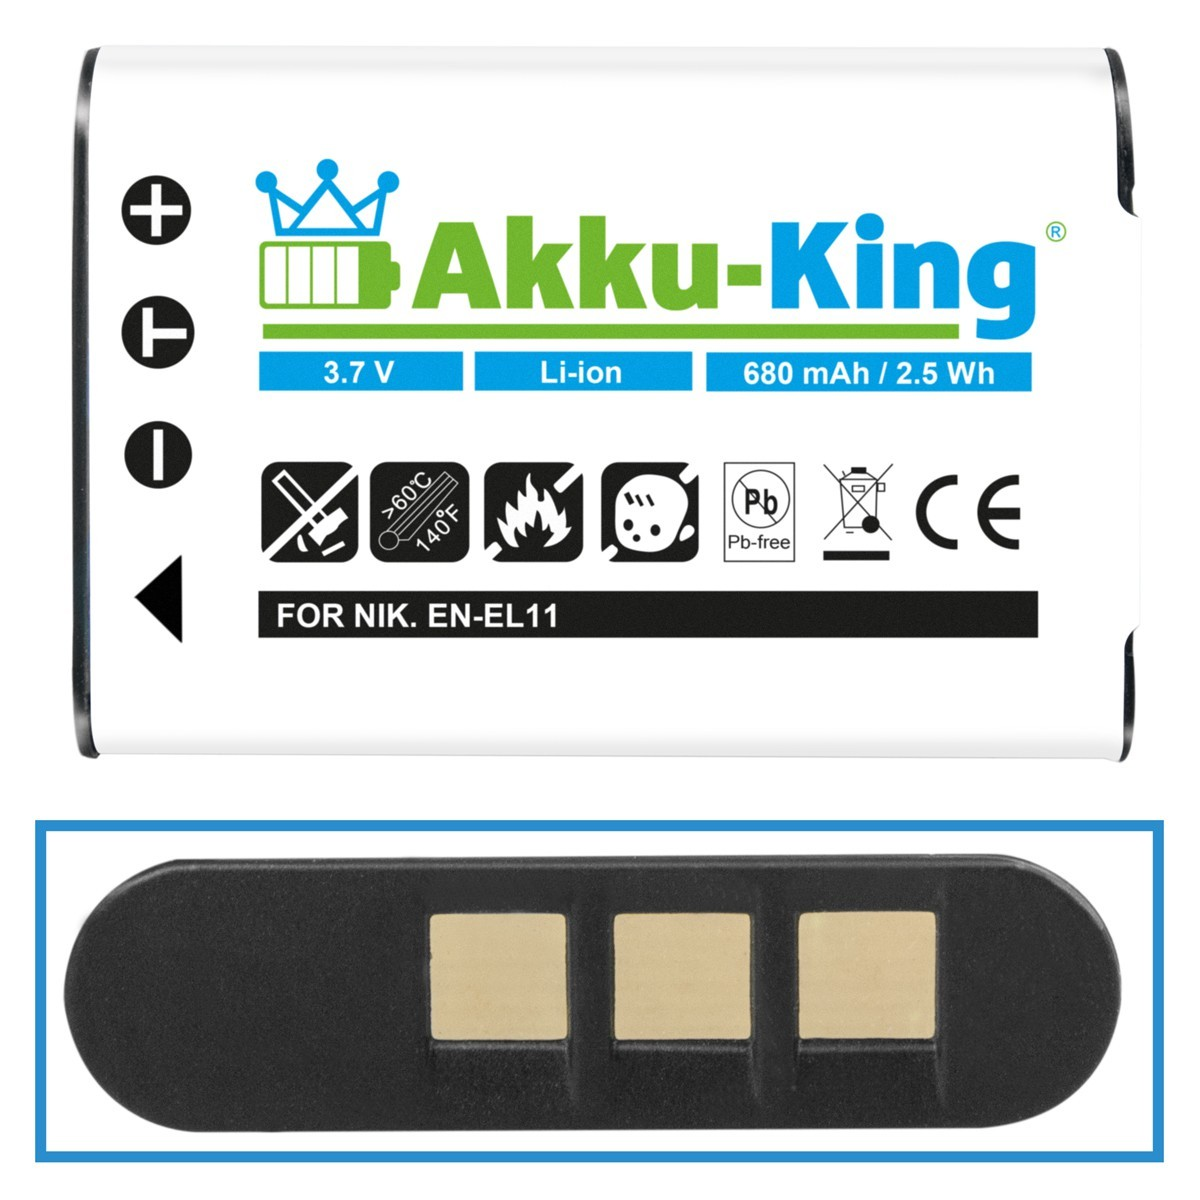 kompatibel Akku 3.7 680mAh Nikon Volt, EN-EL11 AKKU-KING Li-Ion Kamera-Akku, mit